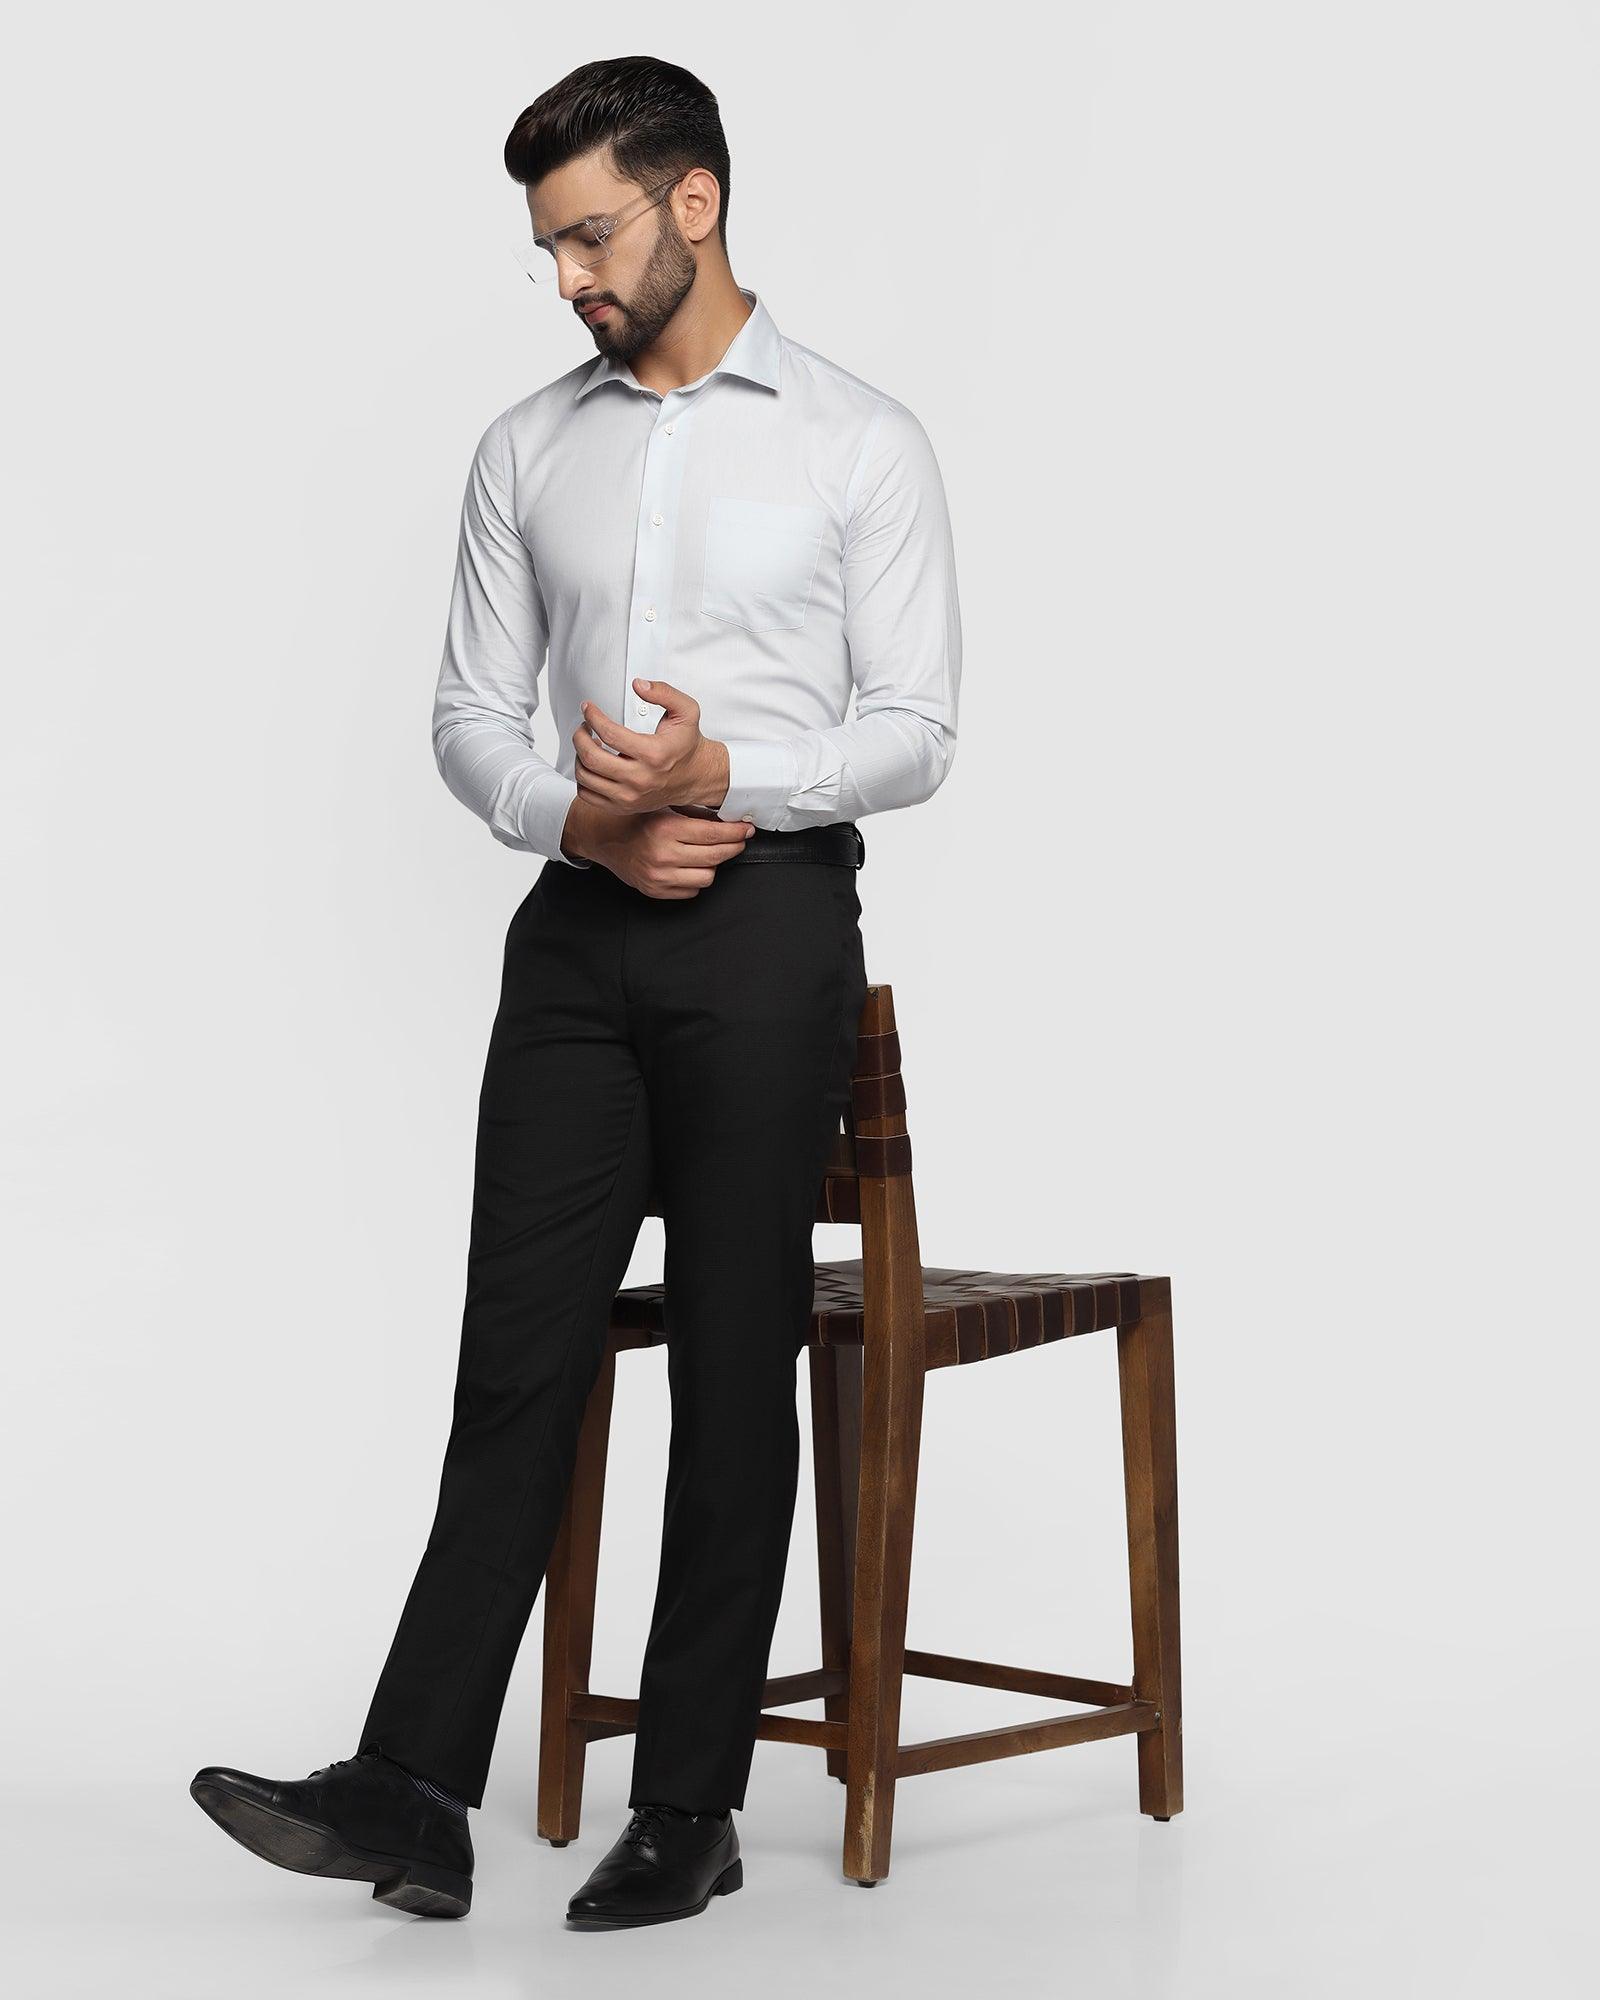 Calvin Klein – Official Site and Online Store | Black dress shirt men, Black  shirt black tie, Mens shirt dress